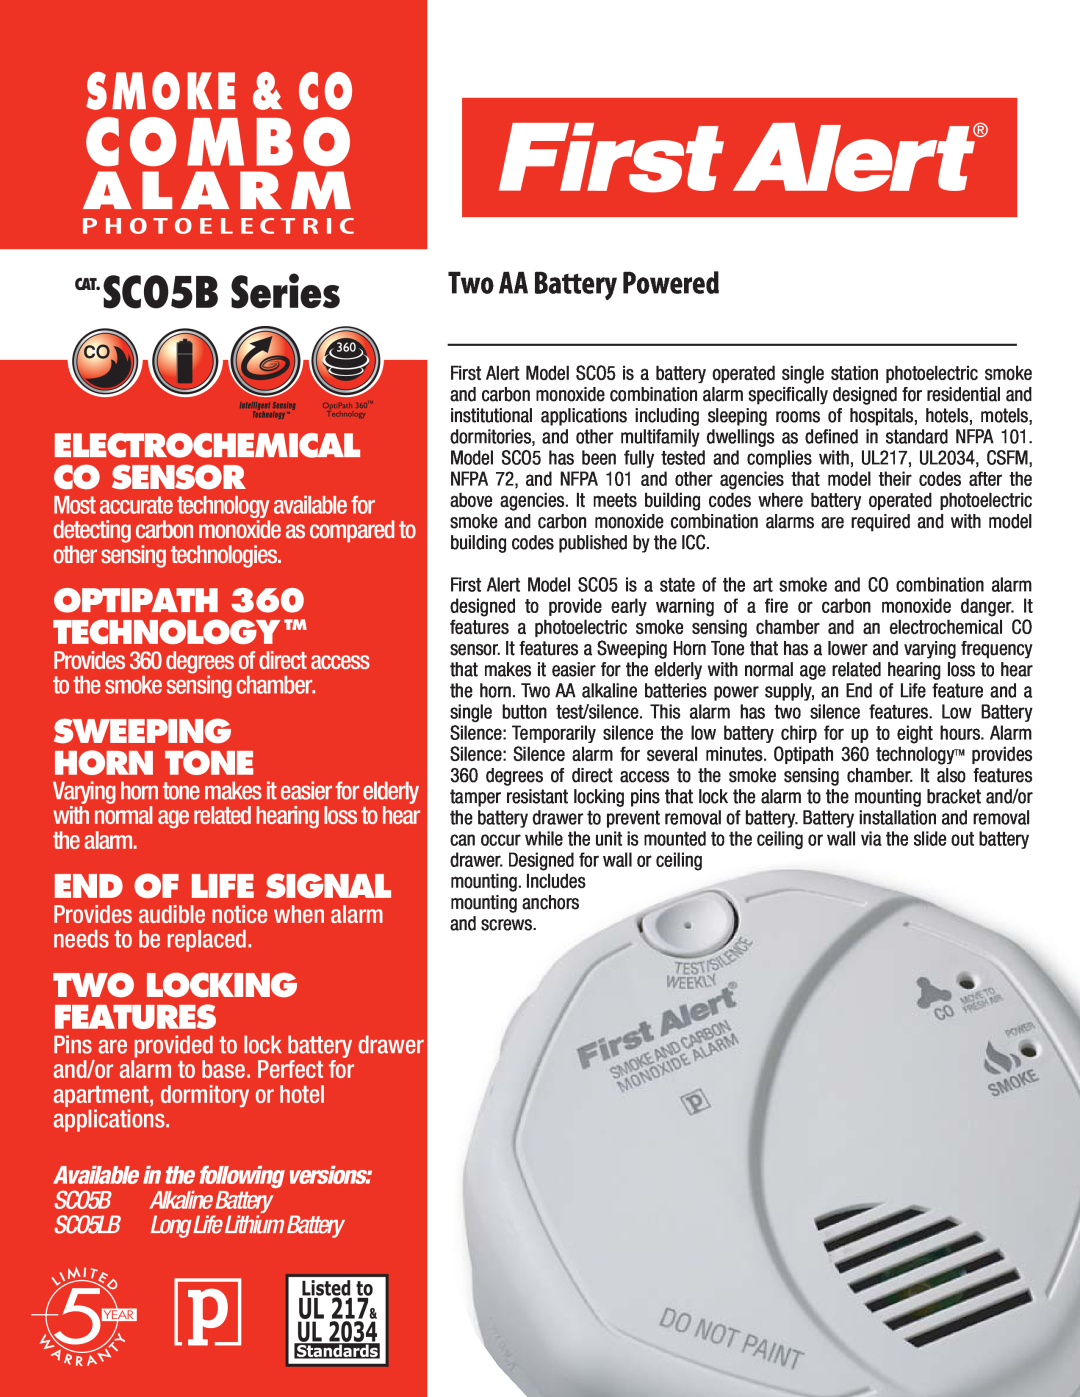 First Alert SCO5LB manual Combo, Alarm, Smoke & Co, CAT. SCO5B Series, Two AA Battery Powered, Optipath Technologytm 